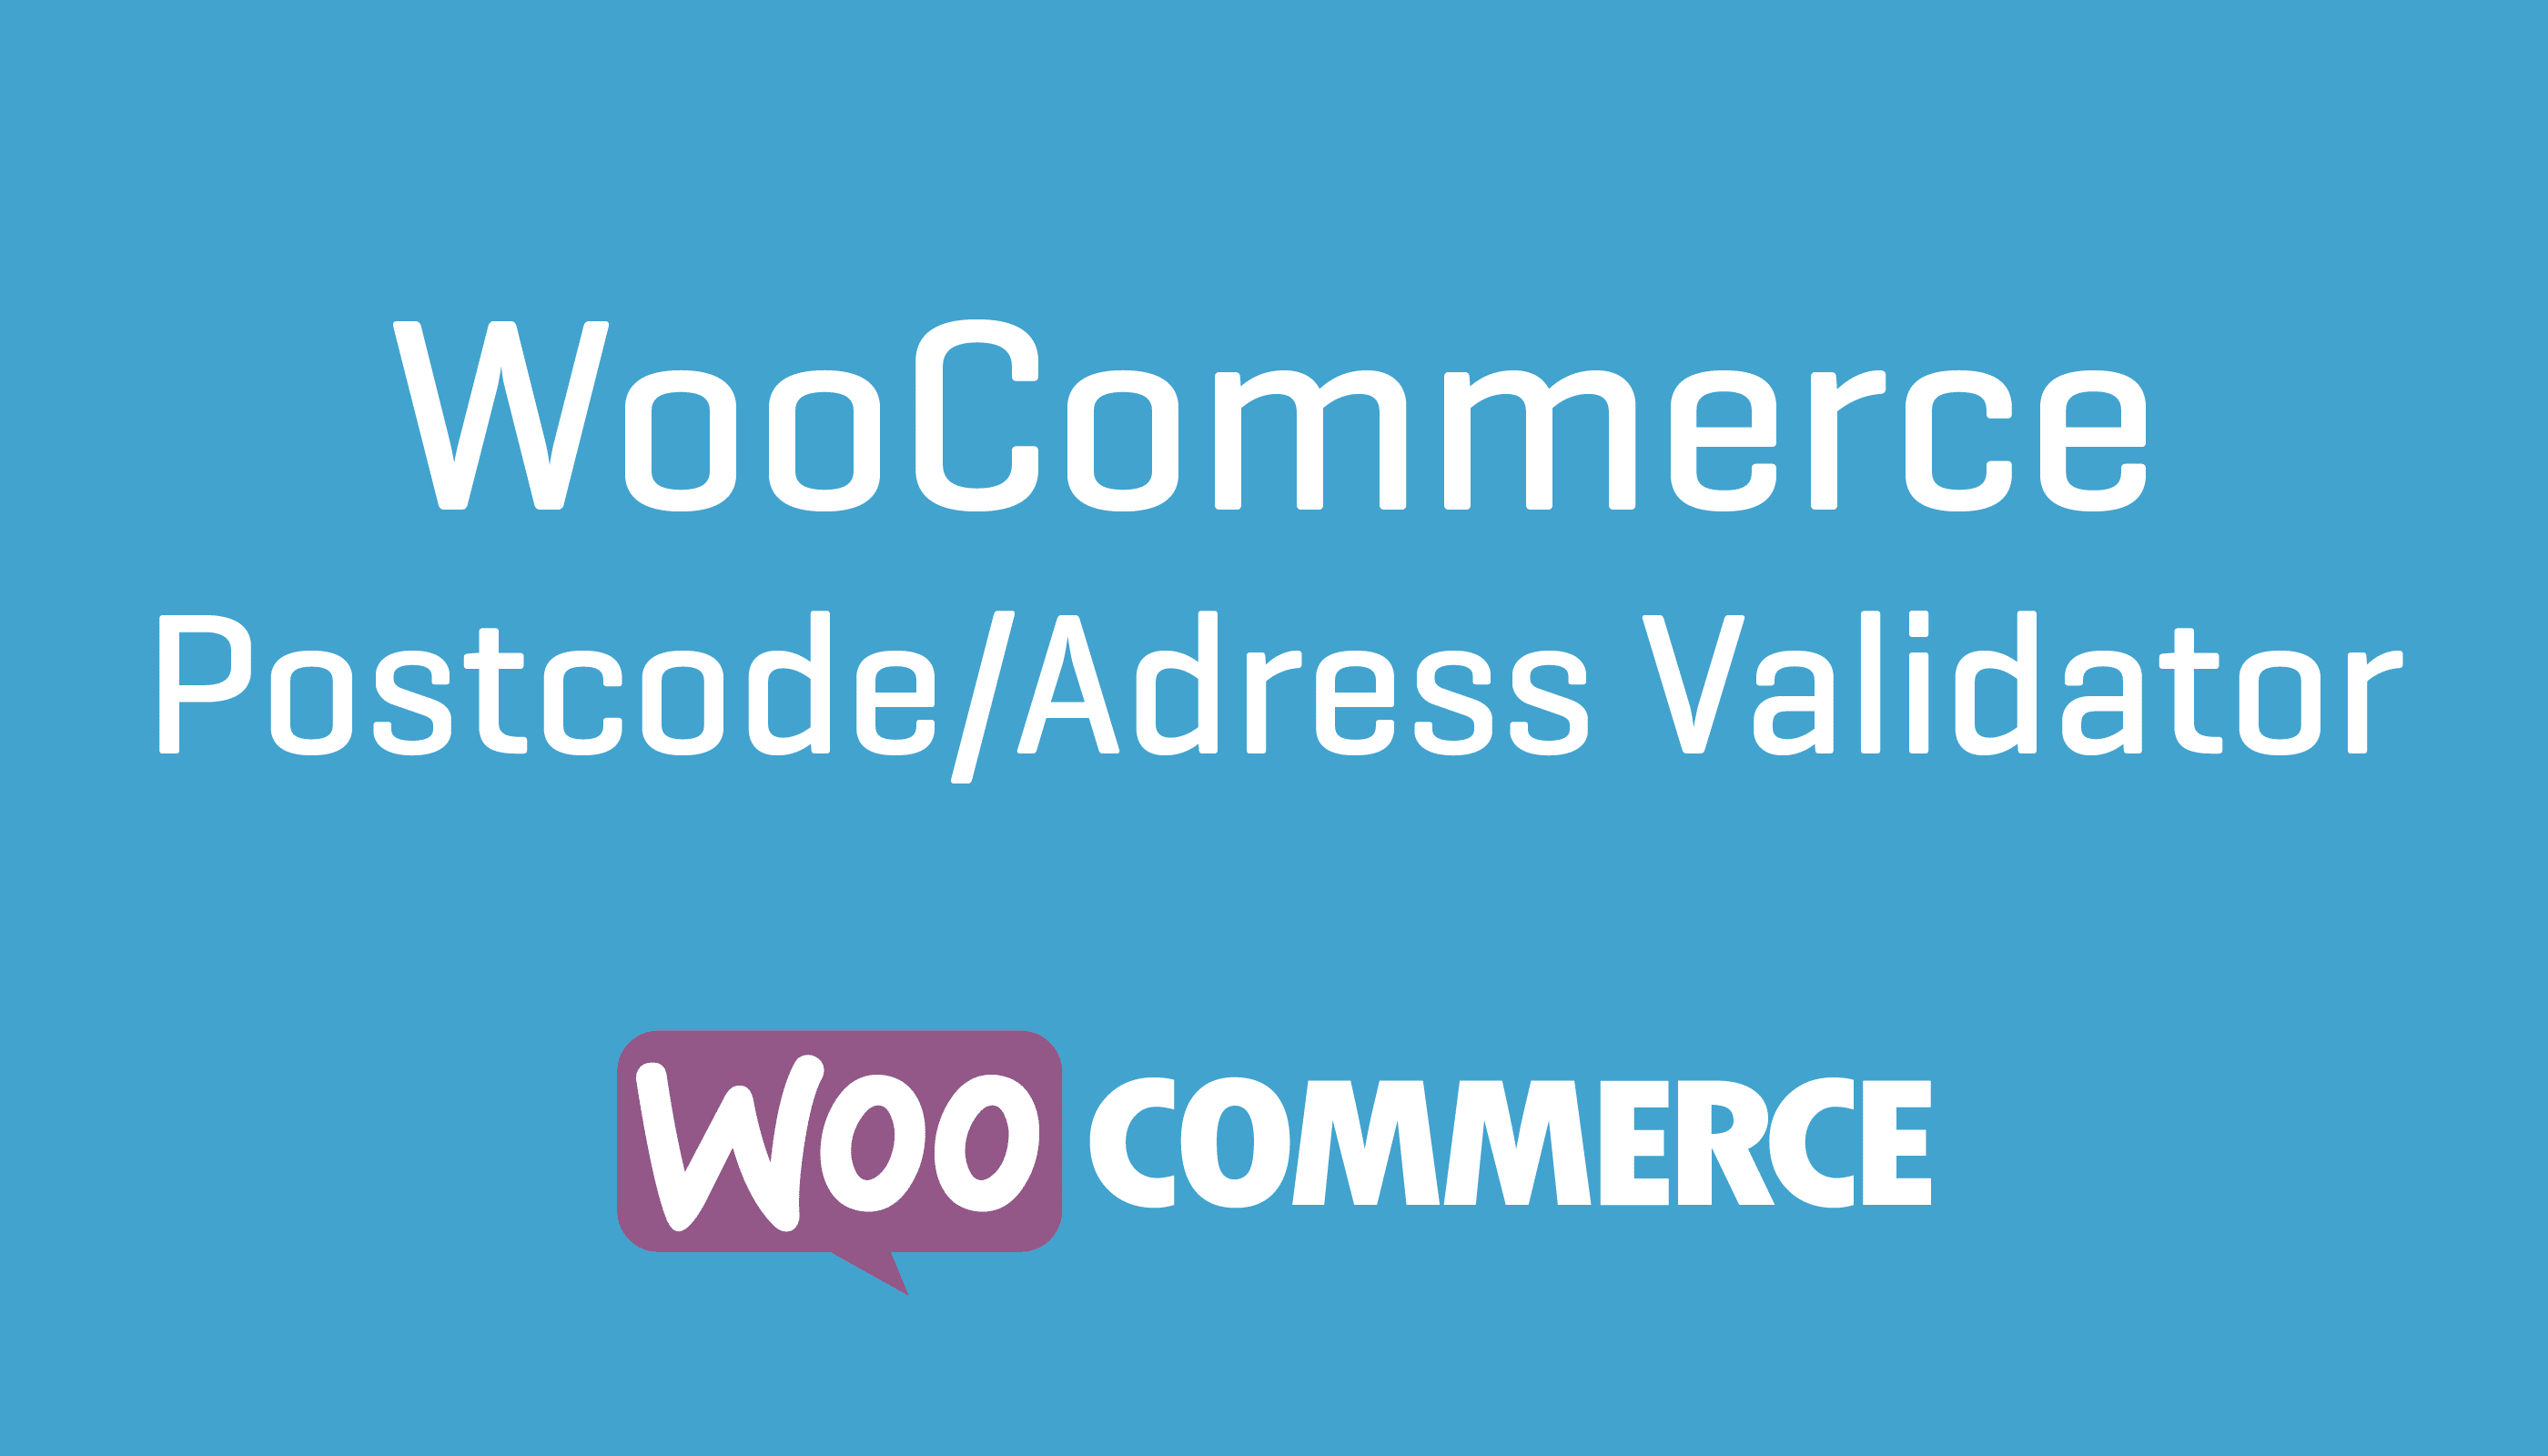 WooCommerce Postcode:Address Validation